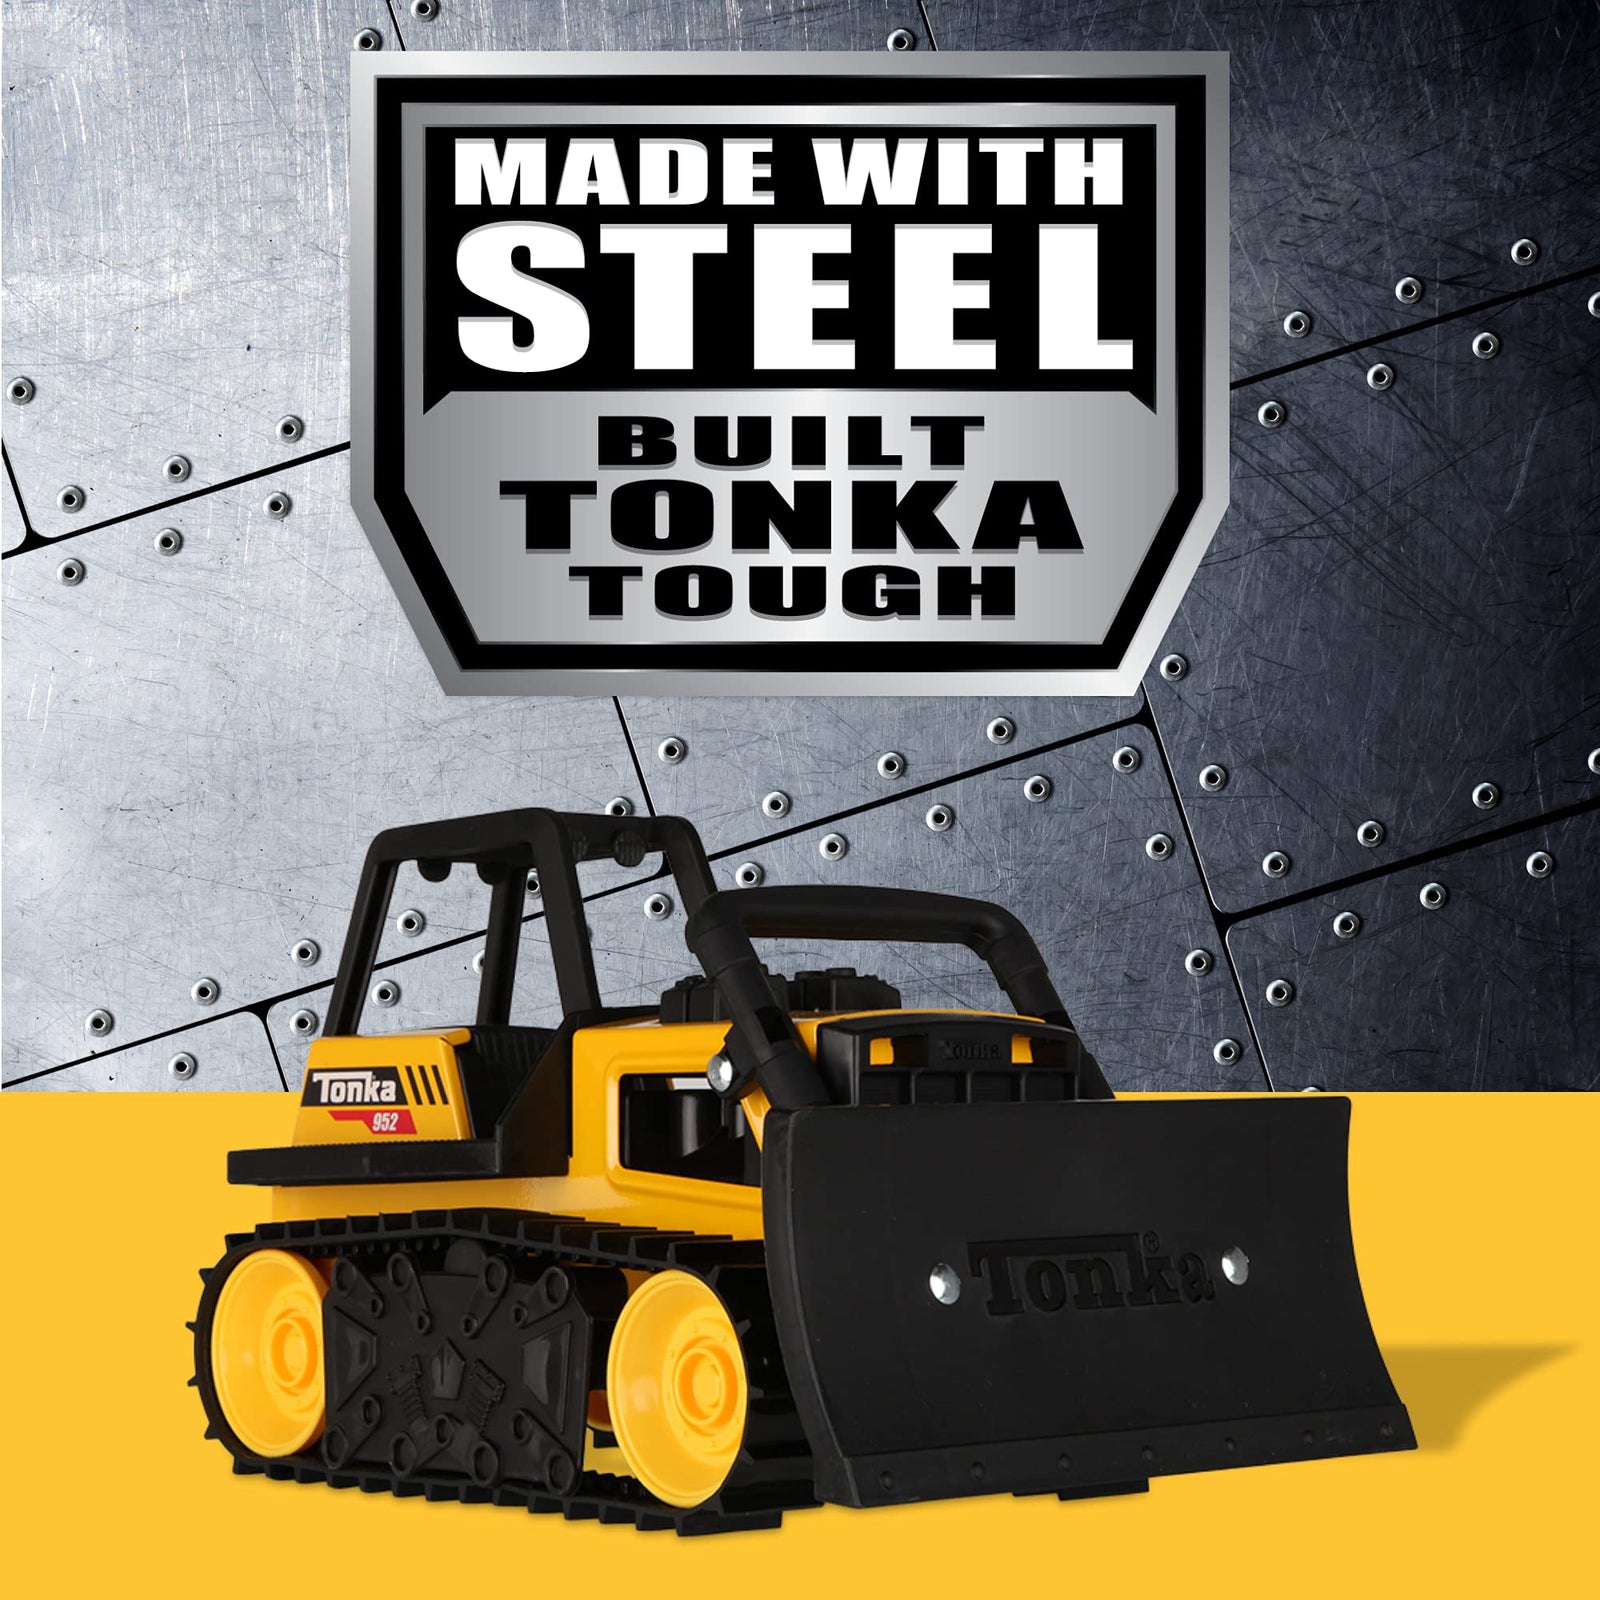 Tonka - Steel Classics Bulldozer, Frustration-Free Packaging (FFP)